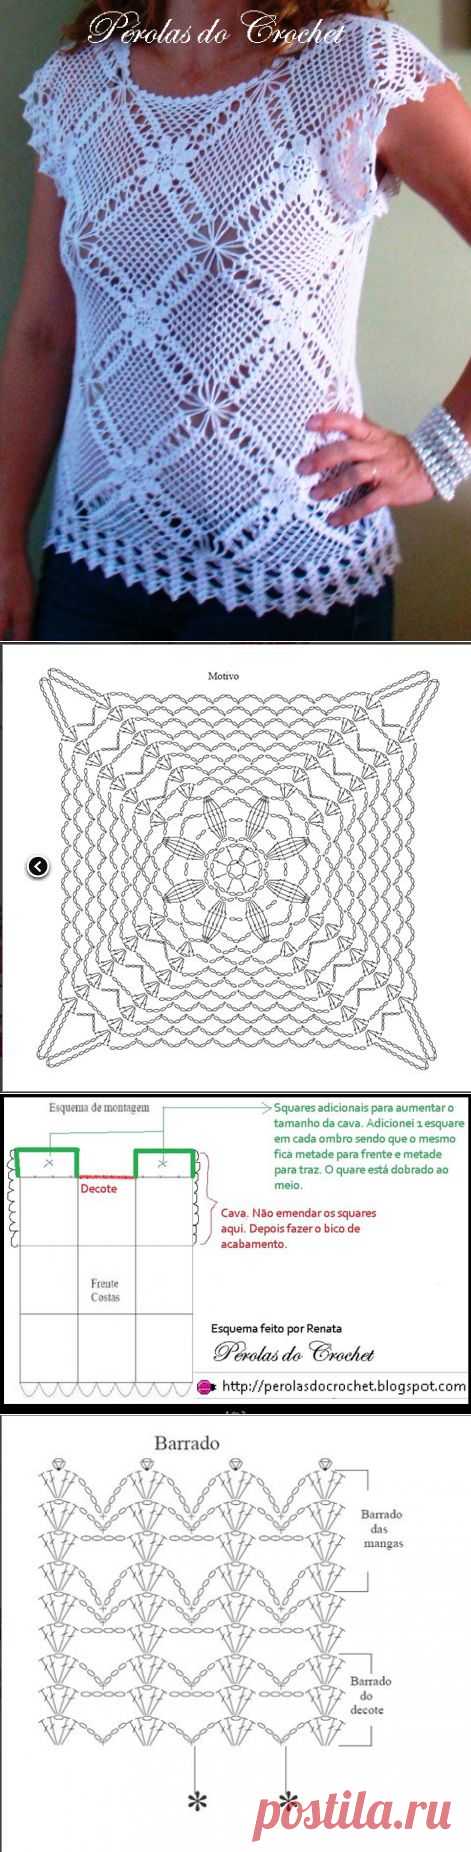 Crochet top for women. Crochet patterns for tops | Laboratory household